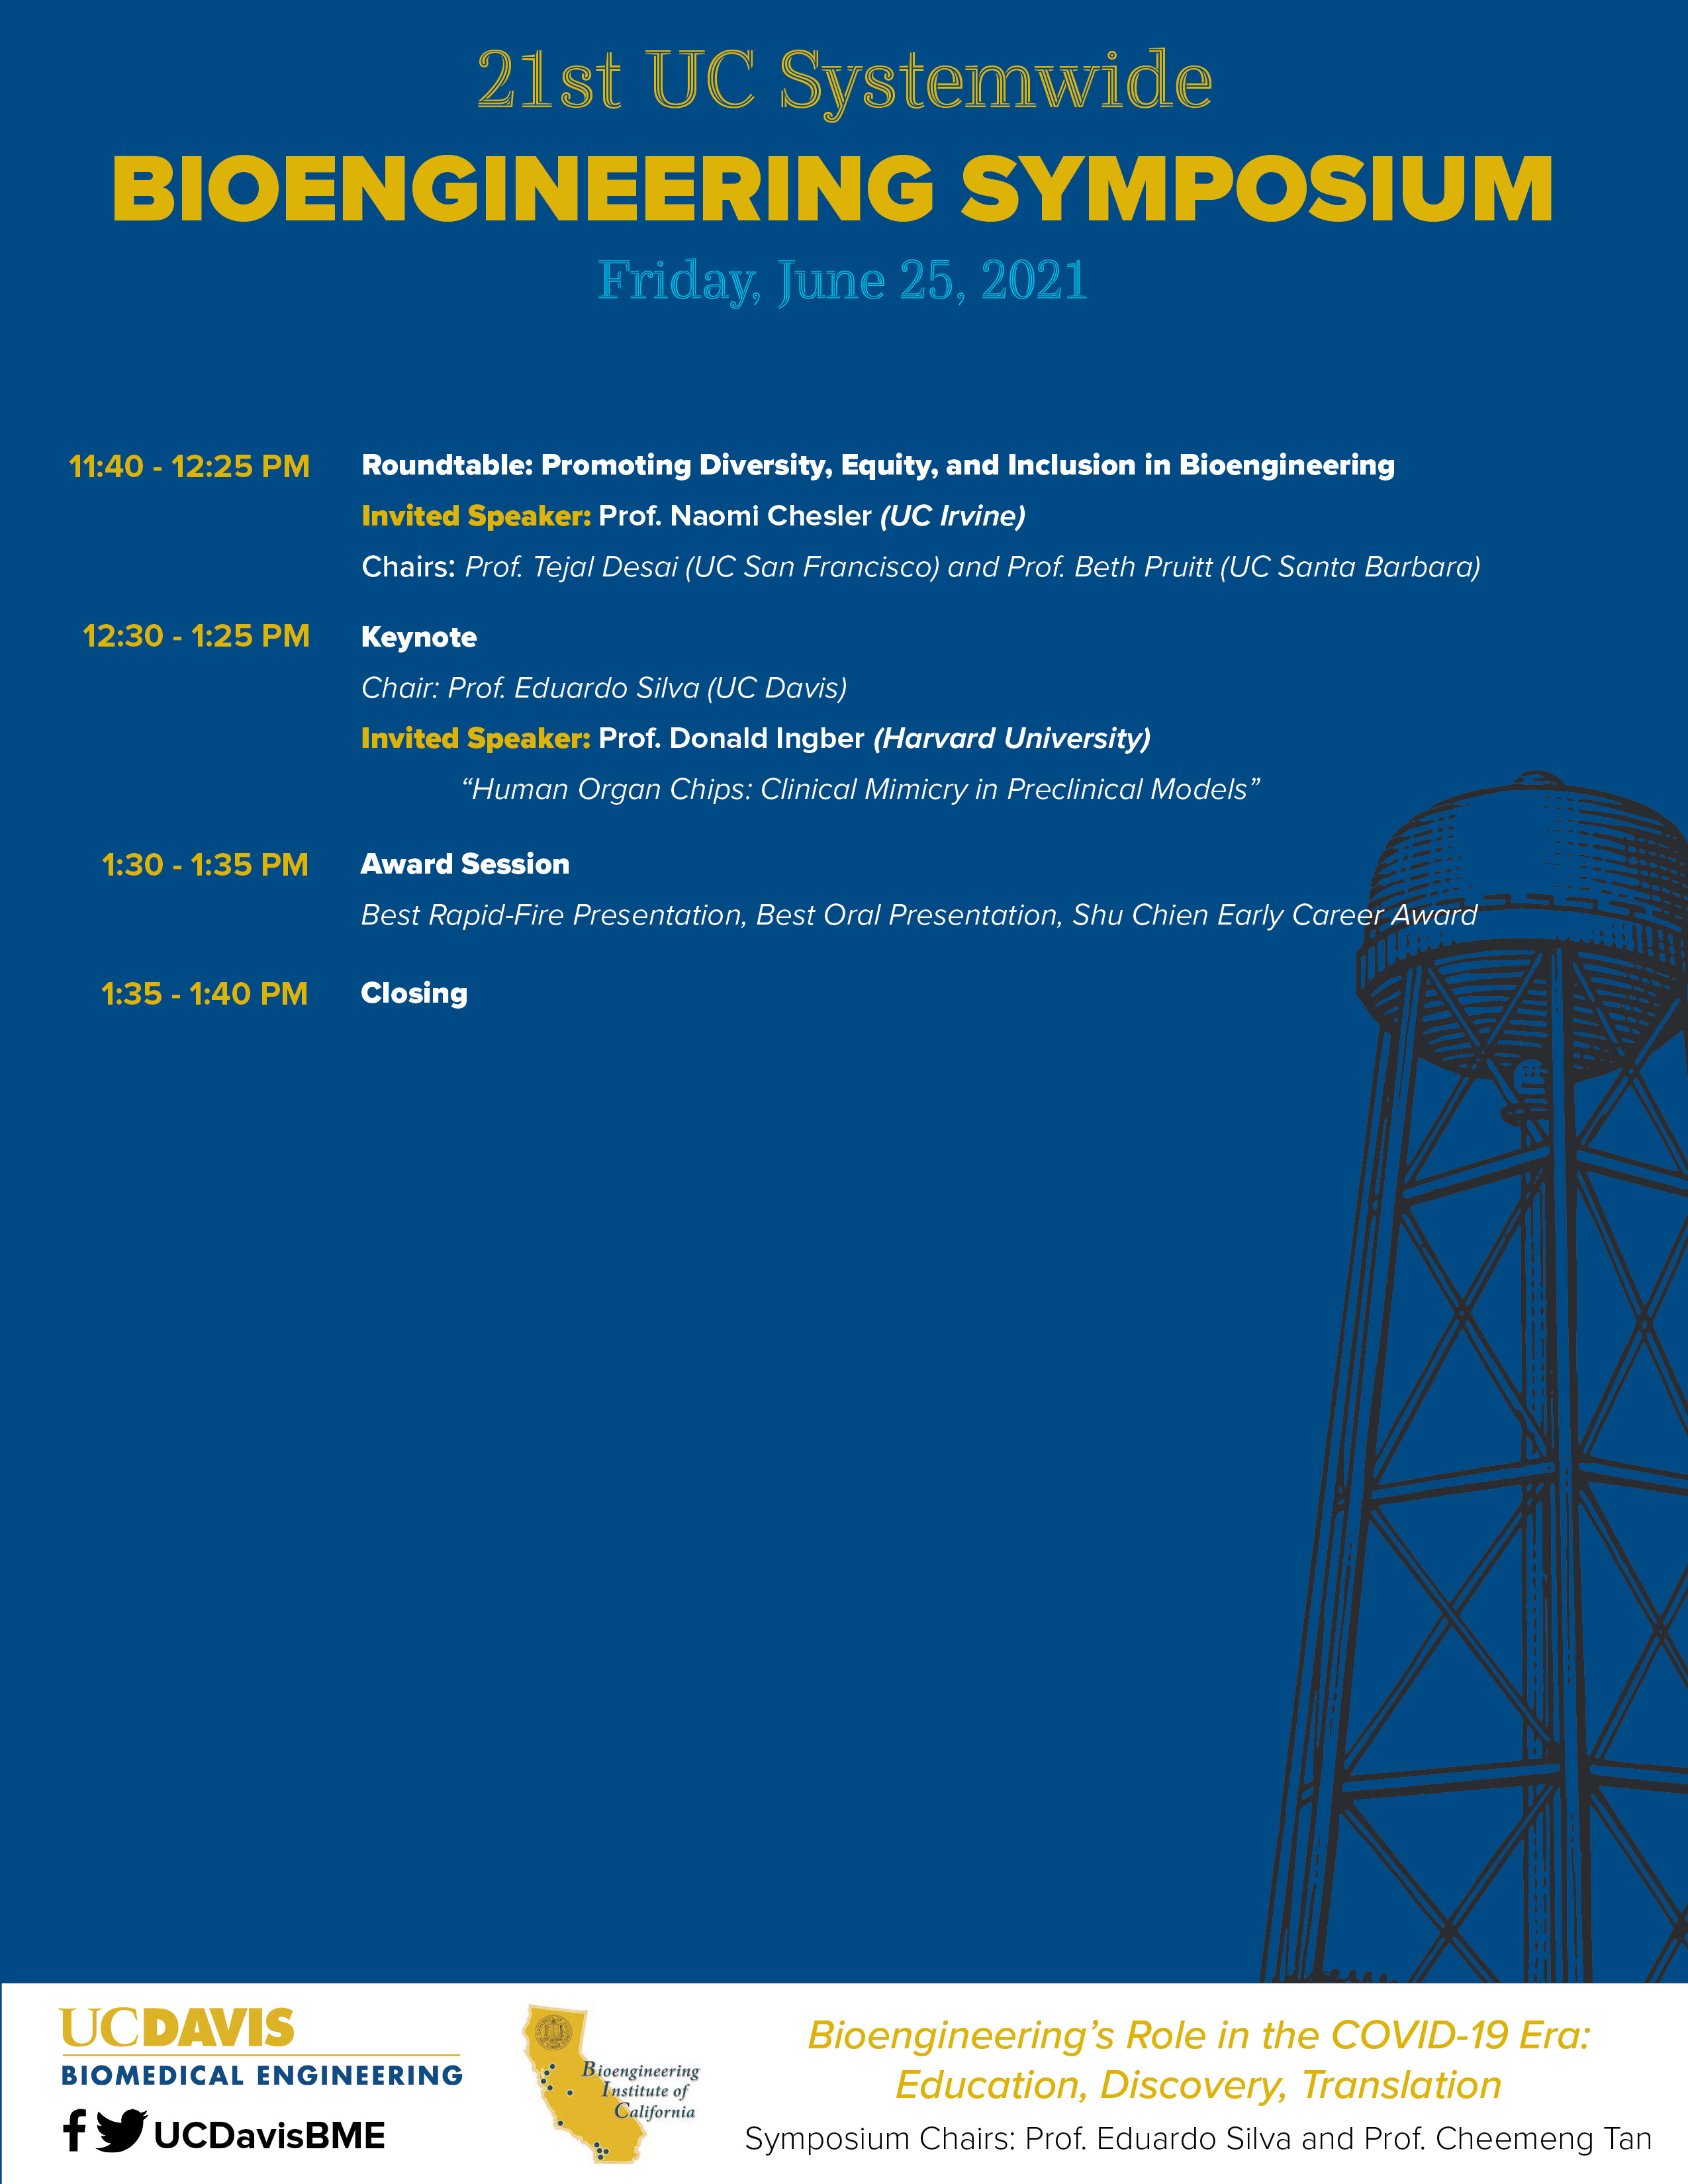 Bioengineering symposium 2021 day 2 schedule